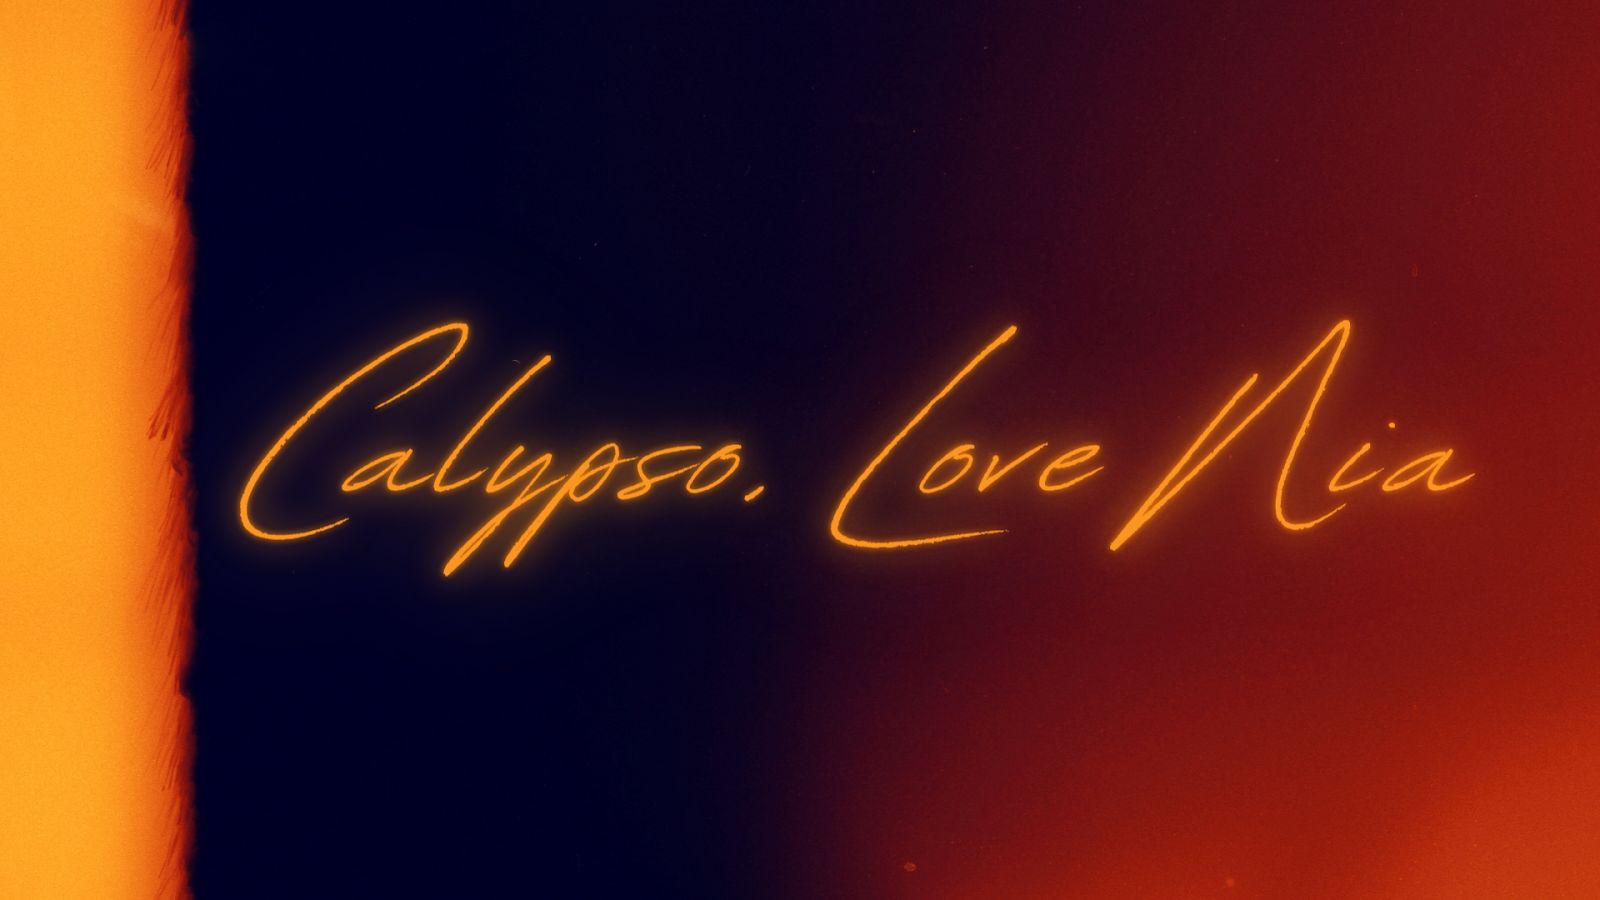 Watch Calypso, Love Nia